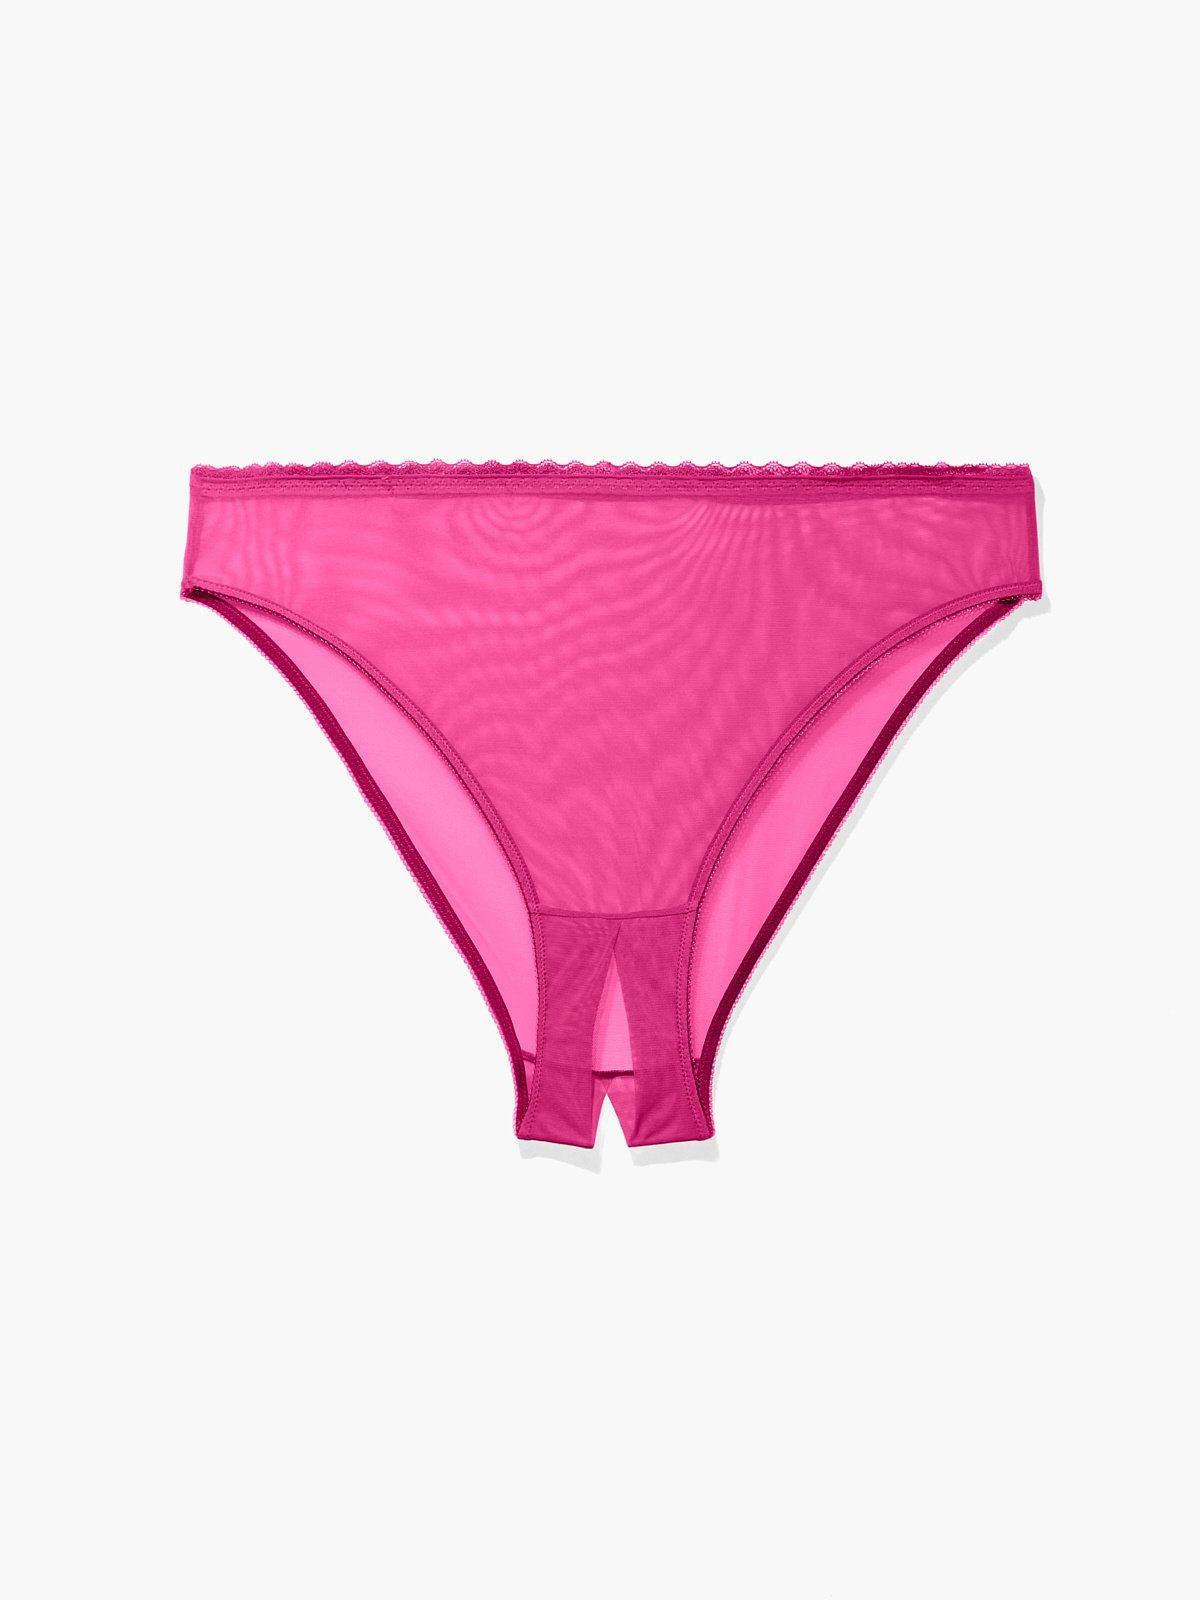 Mesh Crotchless High-Leg Bikini in Pink | SAVAGE X FENTY